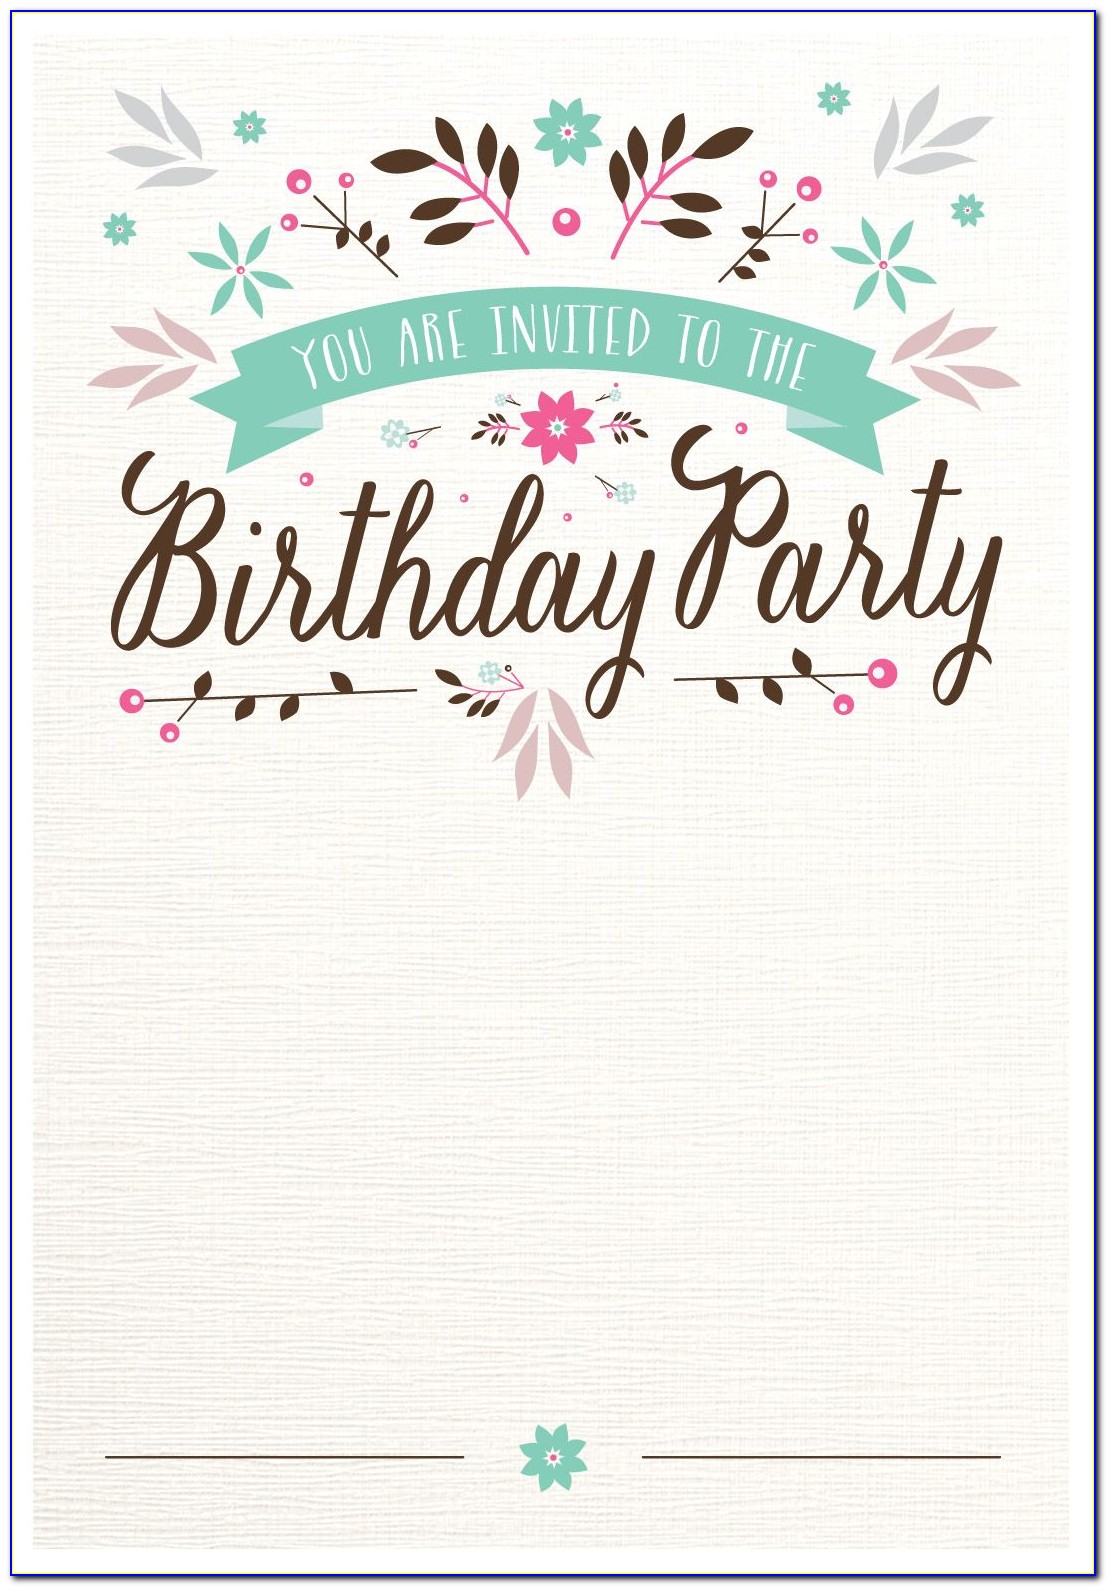 Invitation Card Layout For Birthday